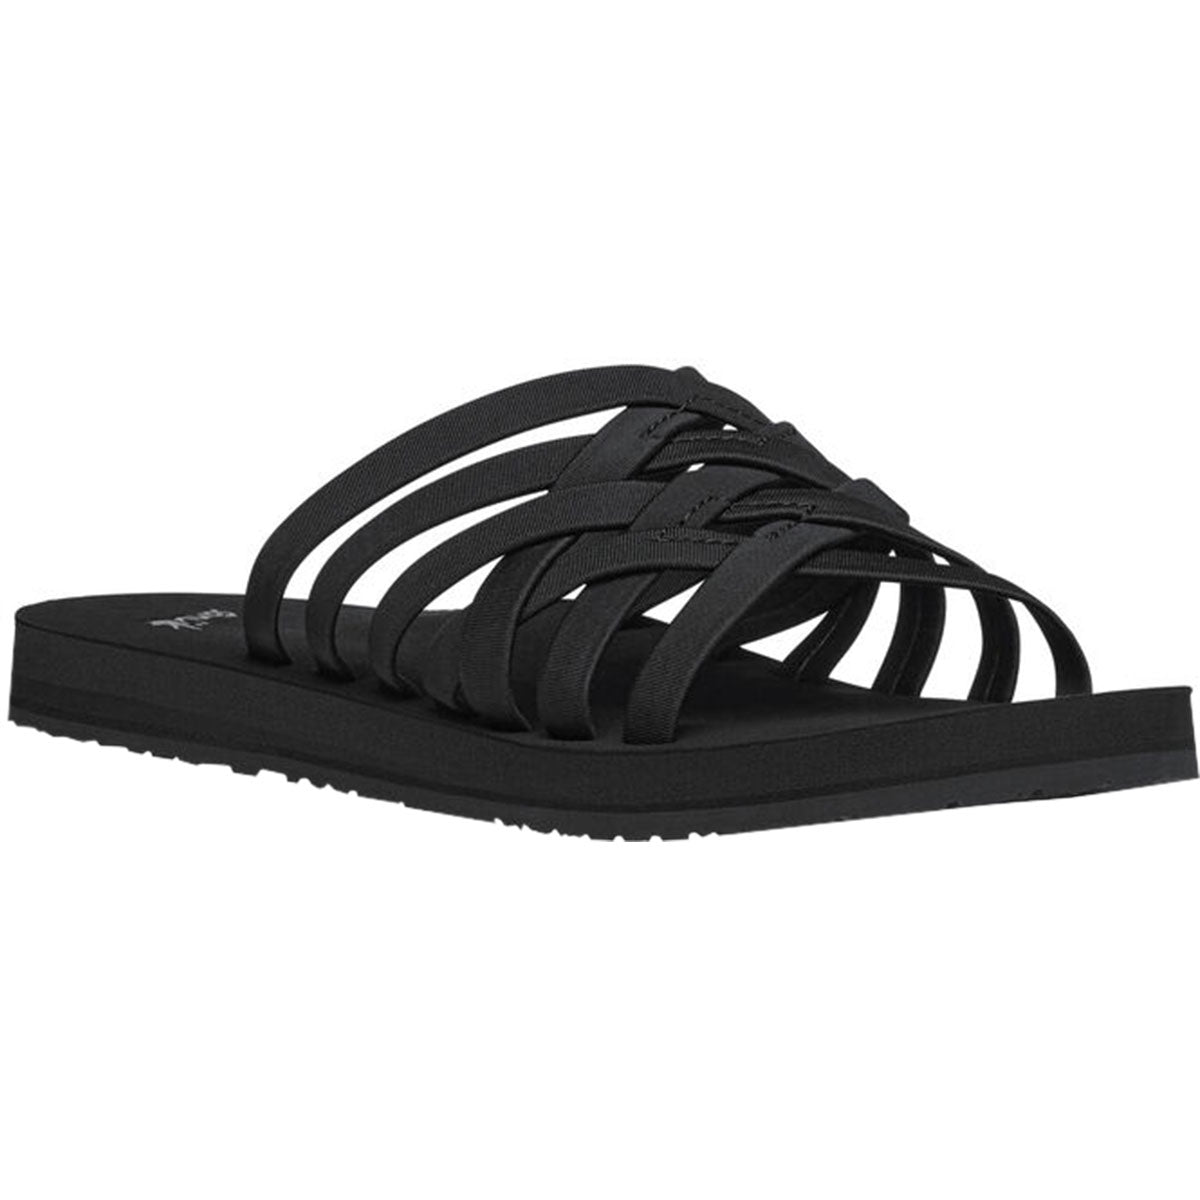 Sanuk Rio Slide Women's Sandal Footwear-1119302